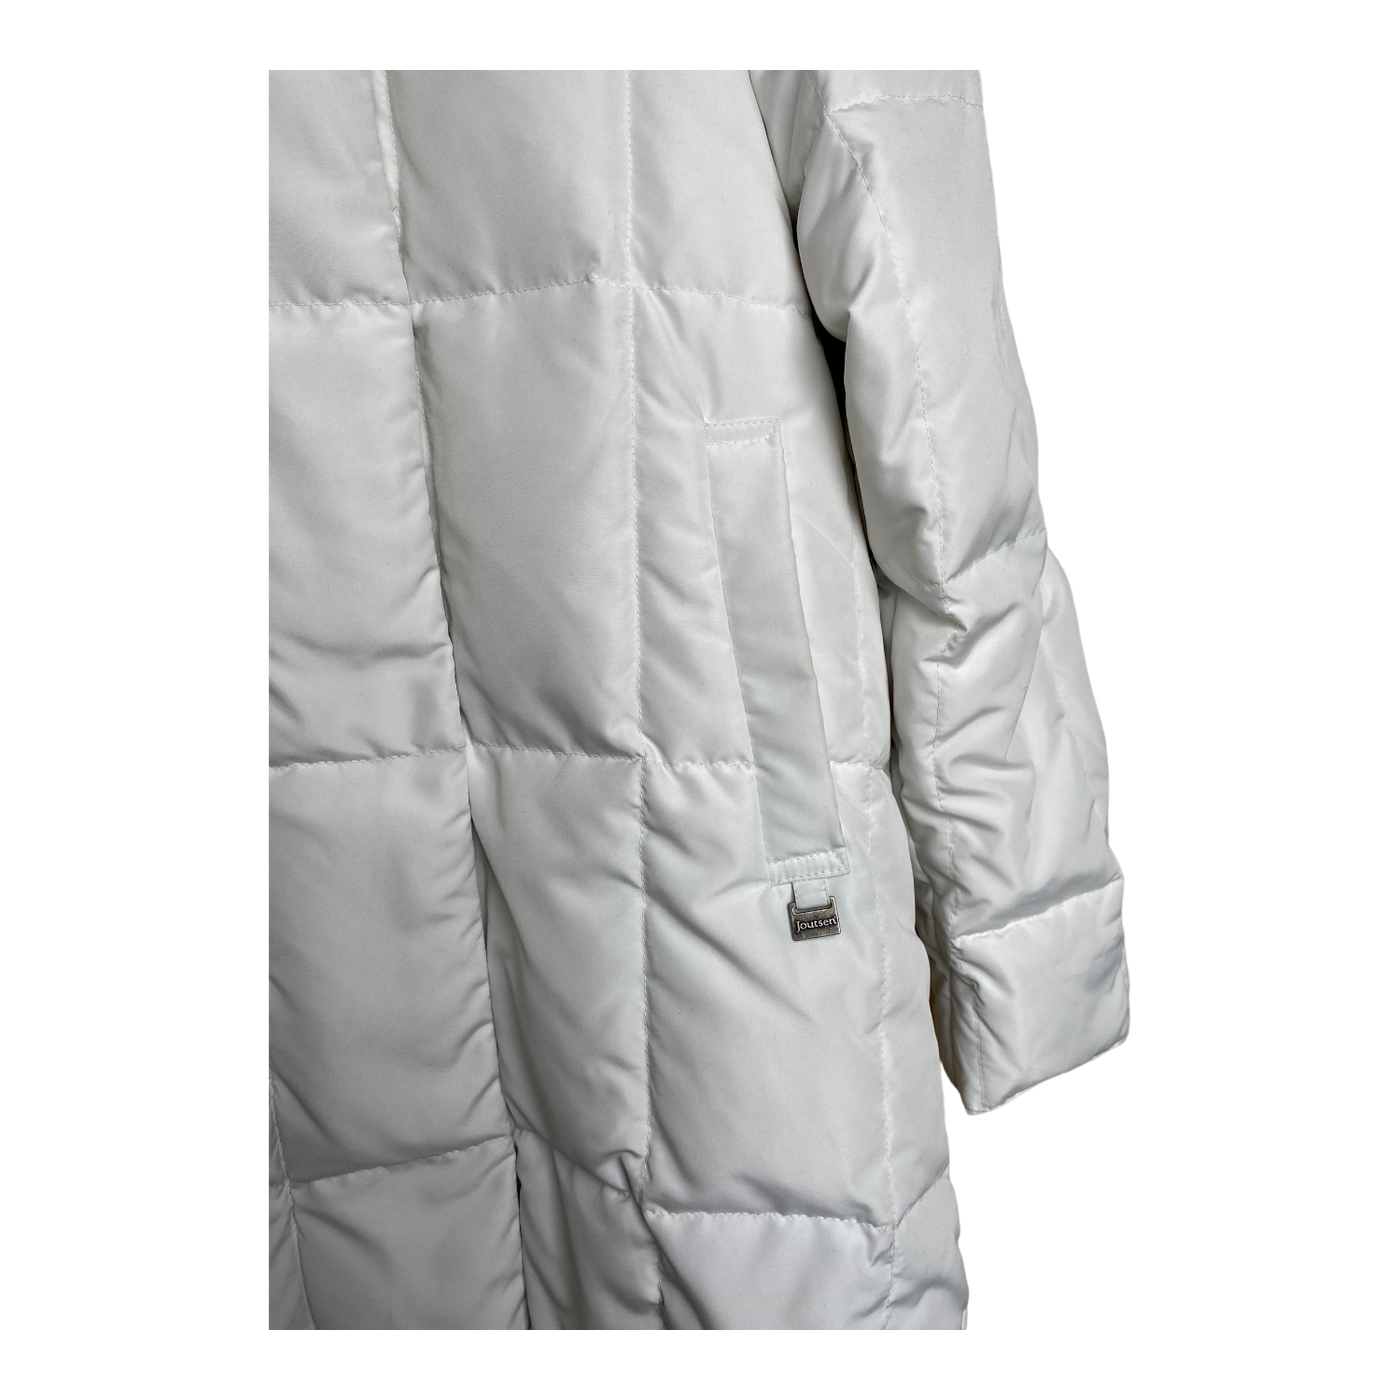 Joutsen alison jacket, white | woman S